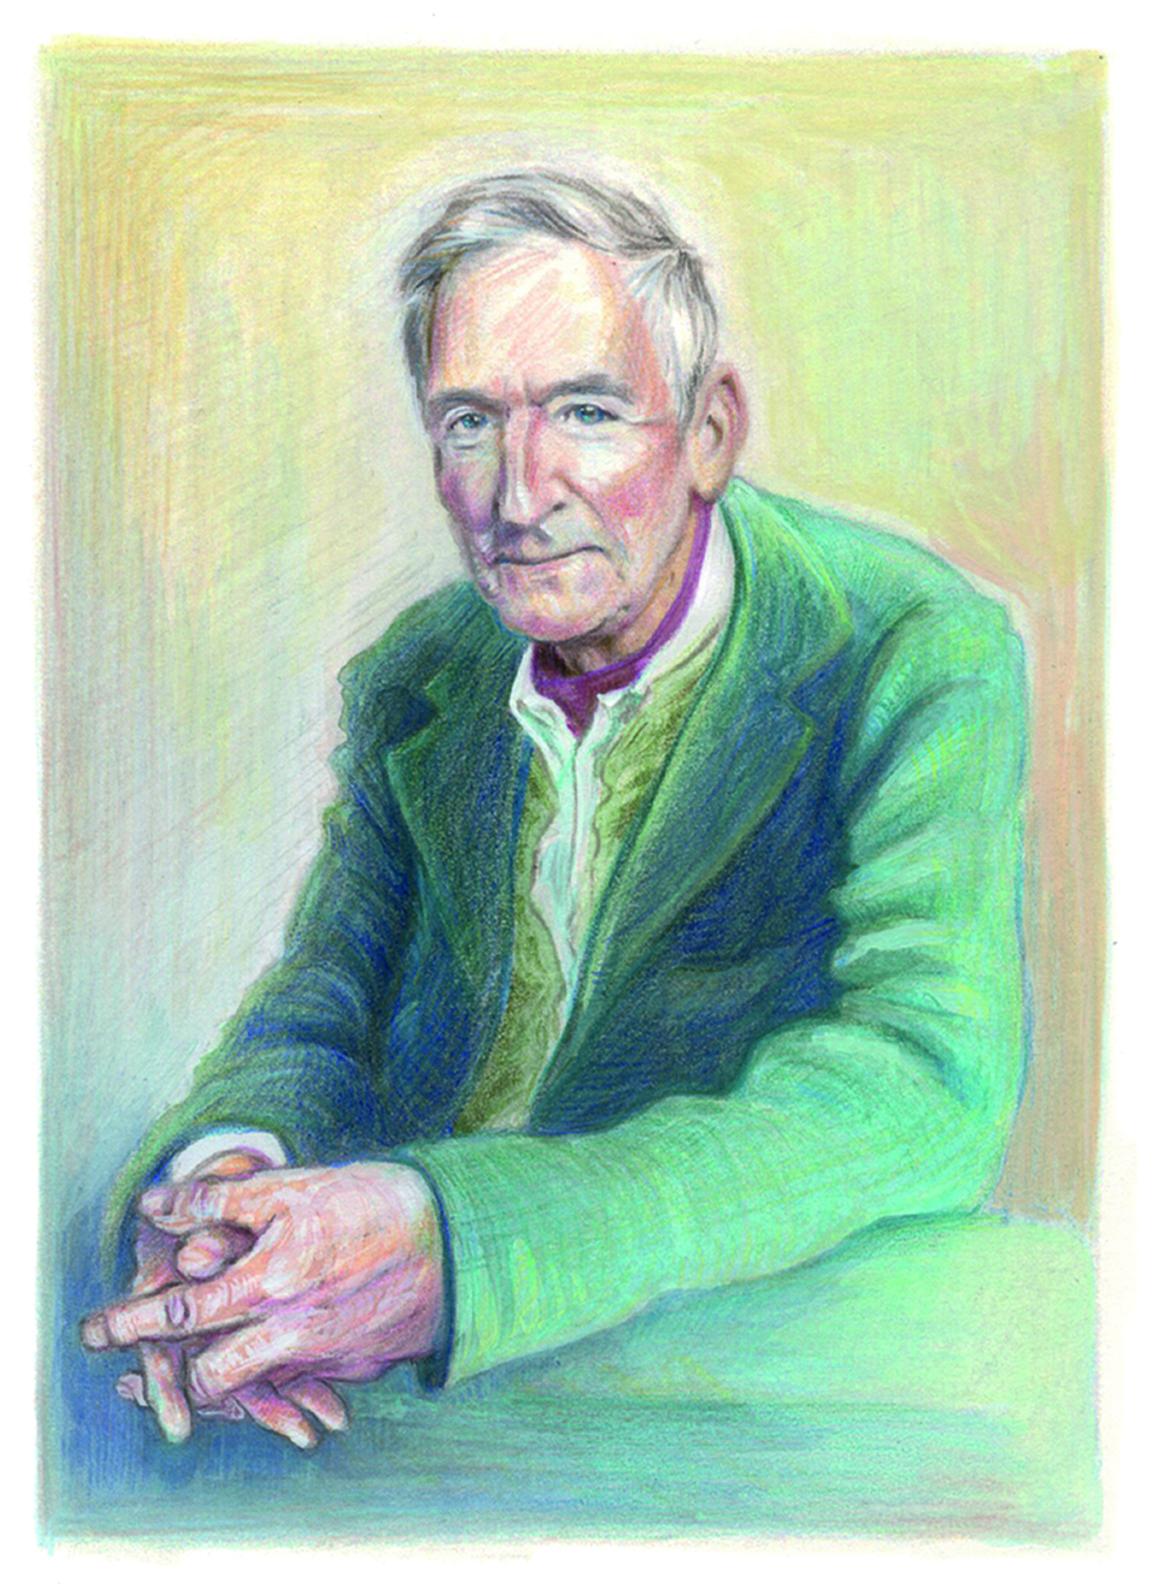 An illustration of Raymond Briggs by Robin Shaw